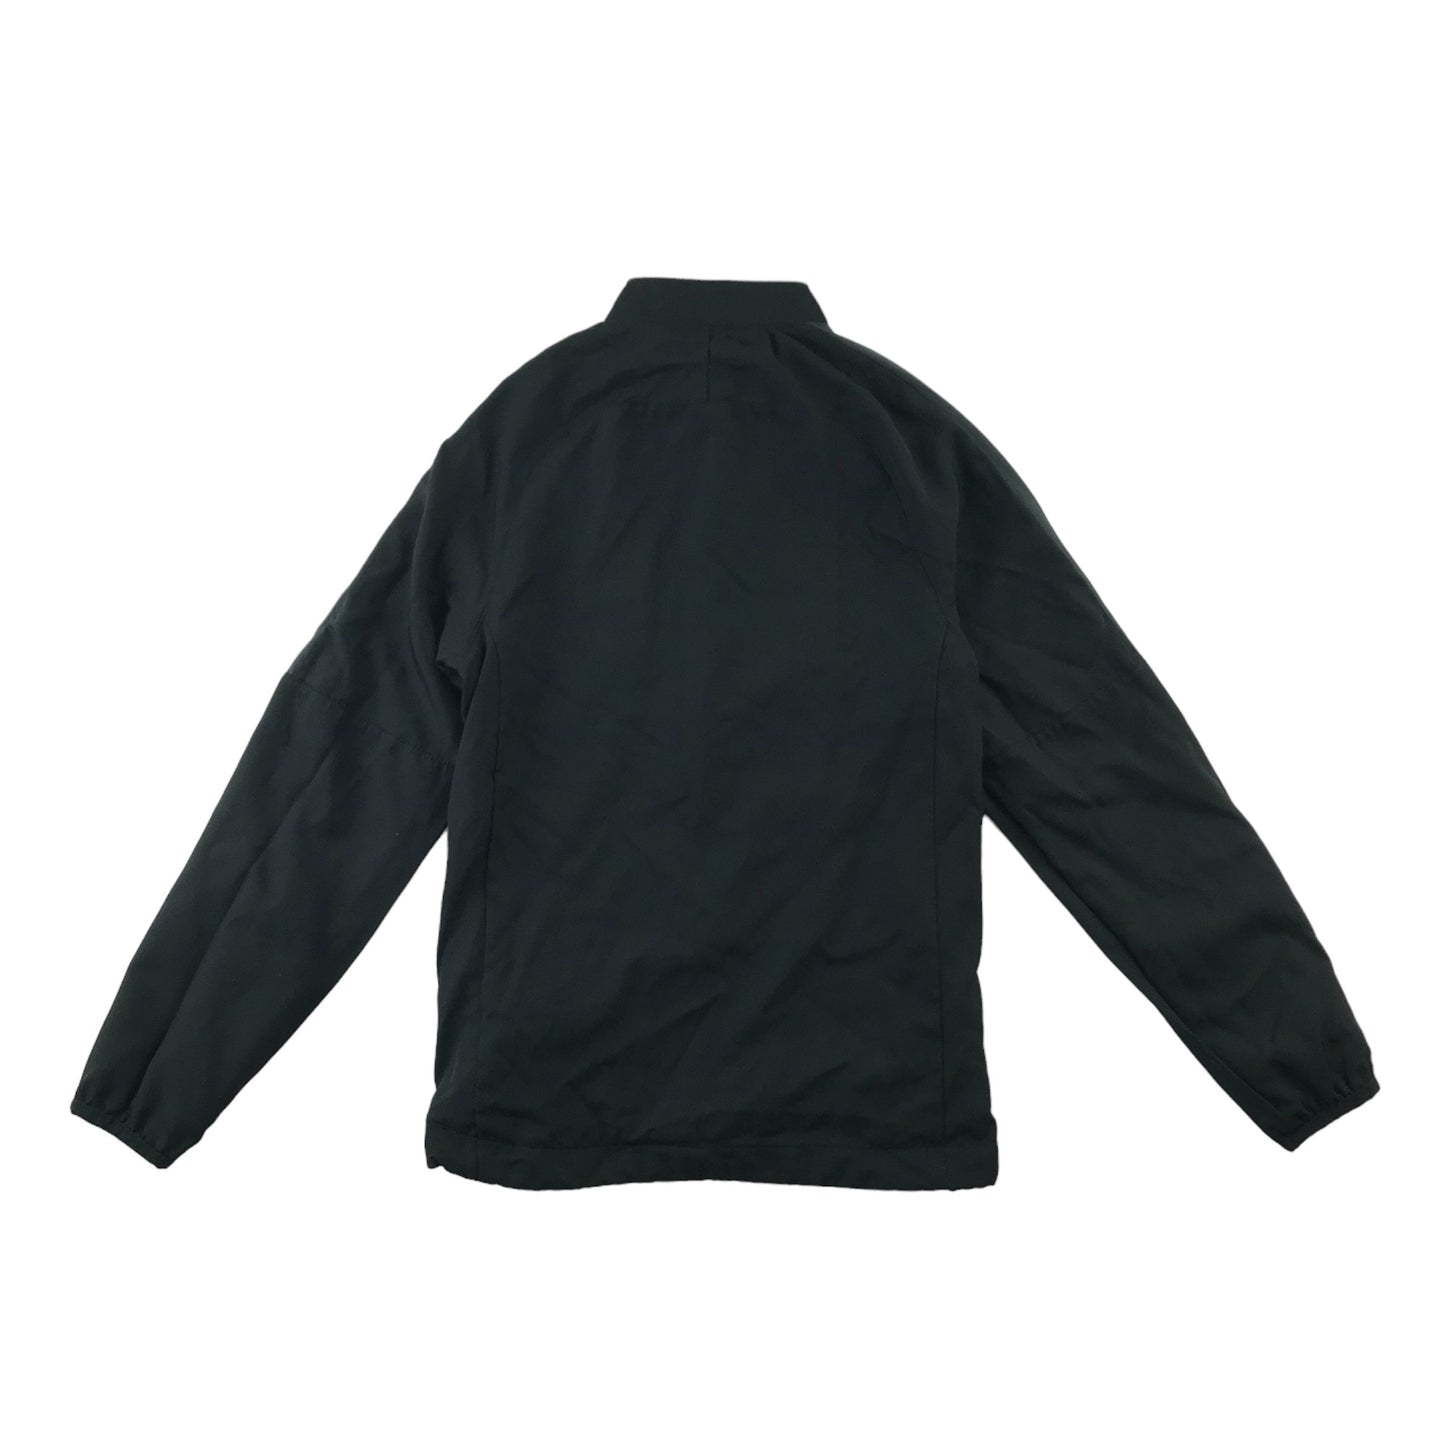 Nike Sweater 8-9 years black sports sweatshirt grey panelled shoulder stripe